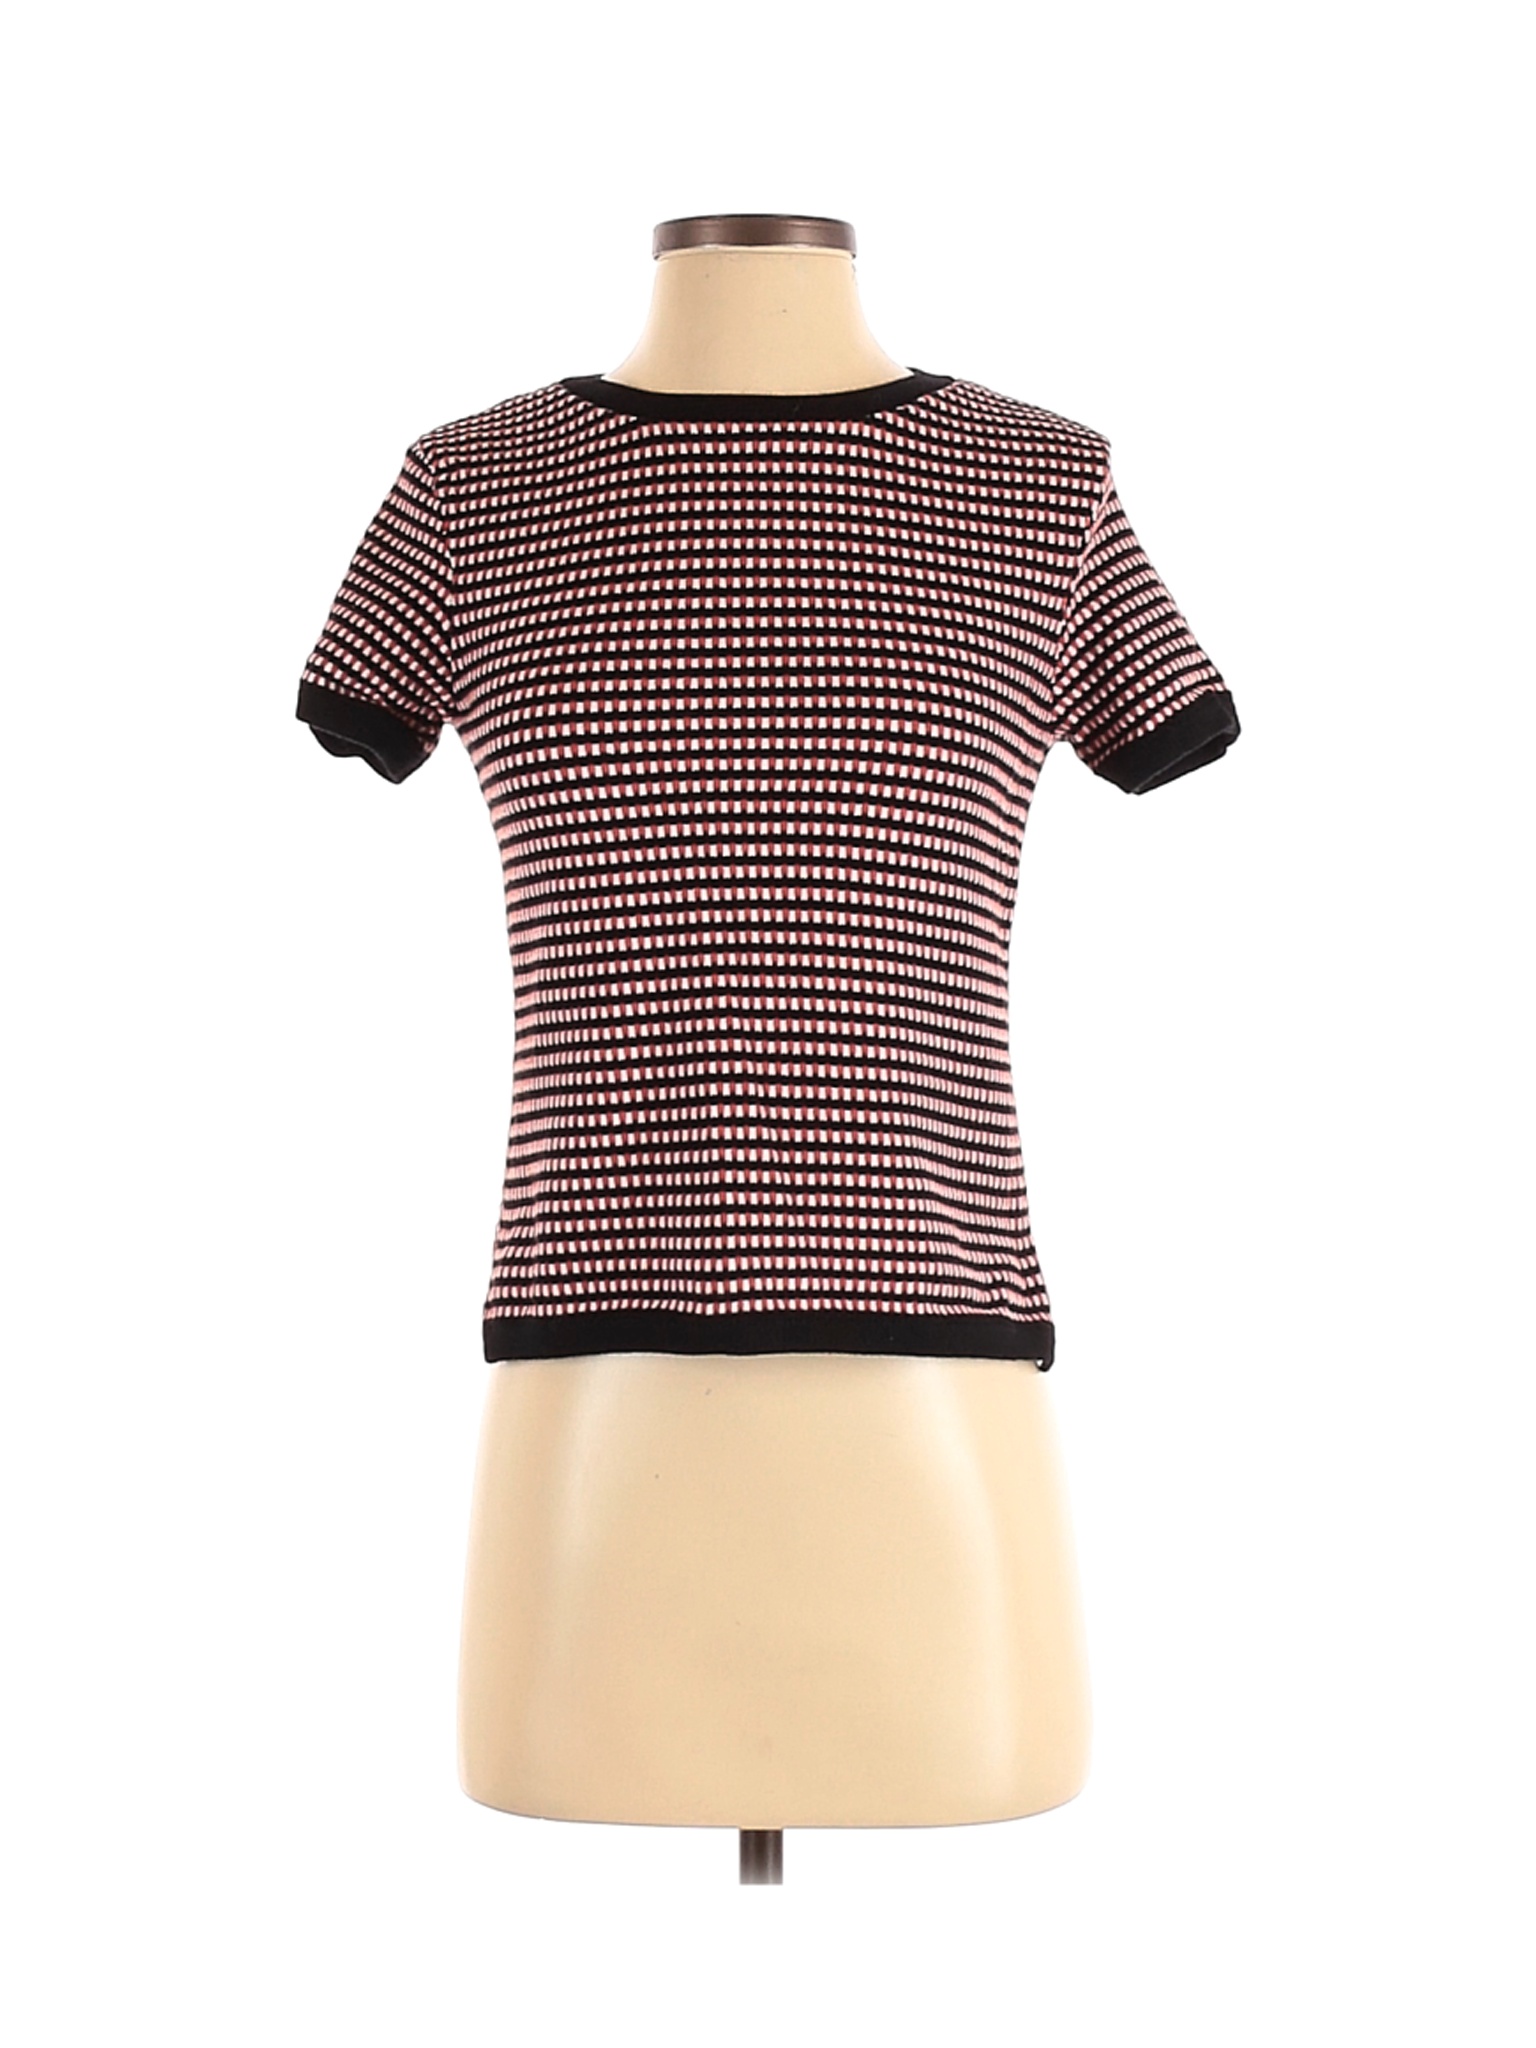 Zara Women Pink Short Sleeve Top S | eBay